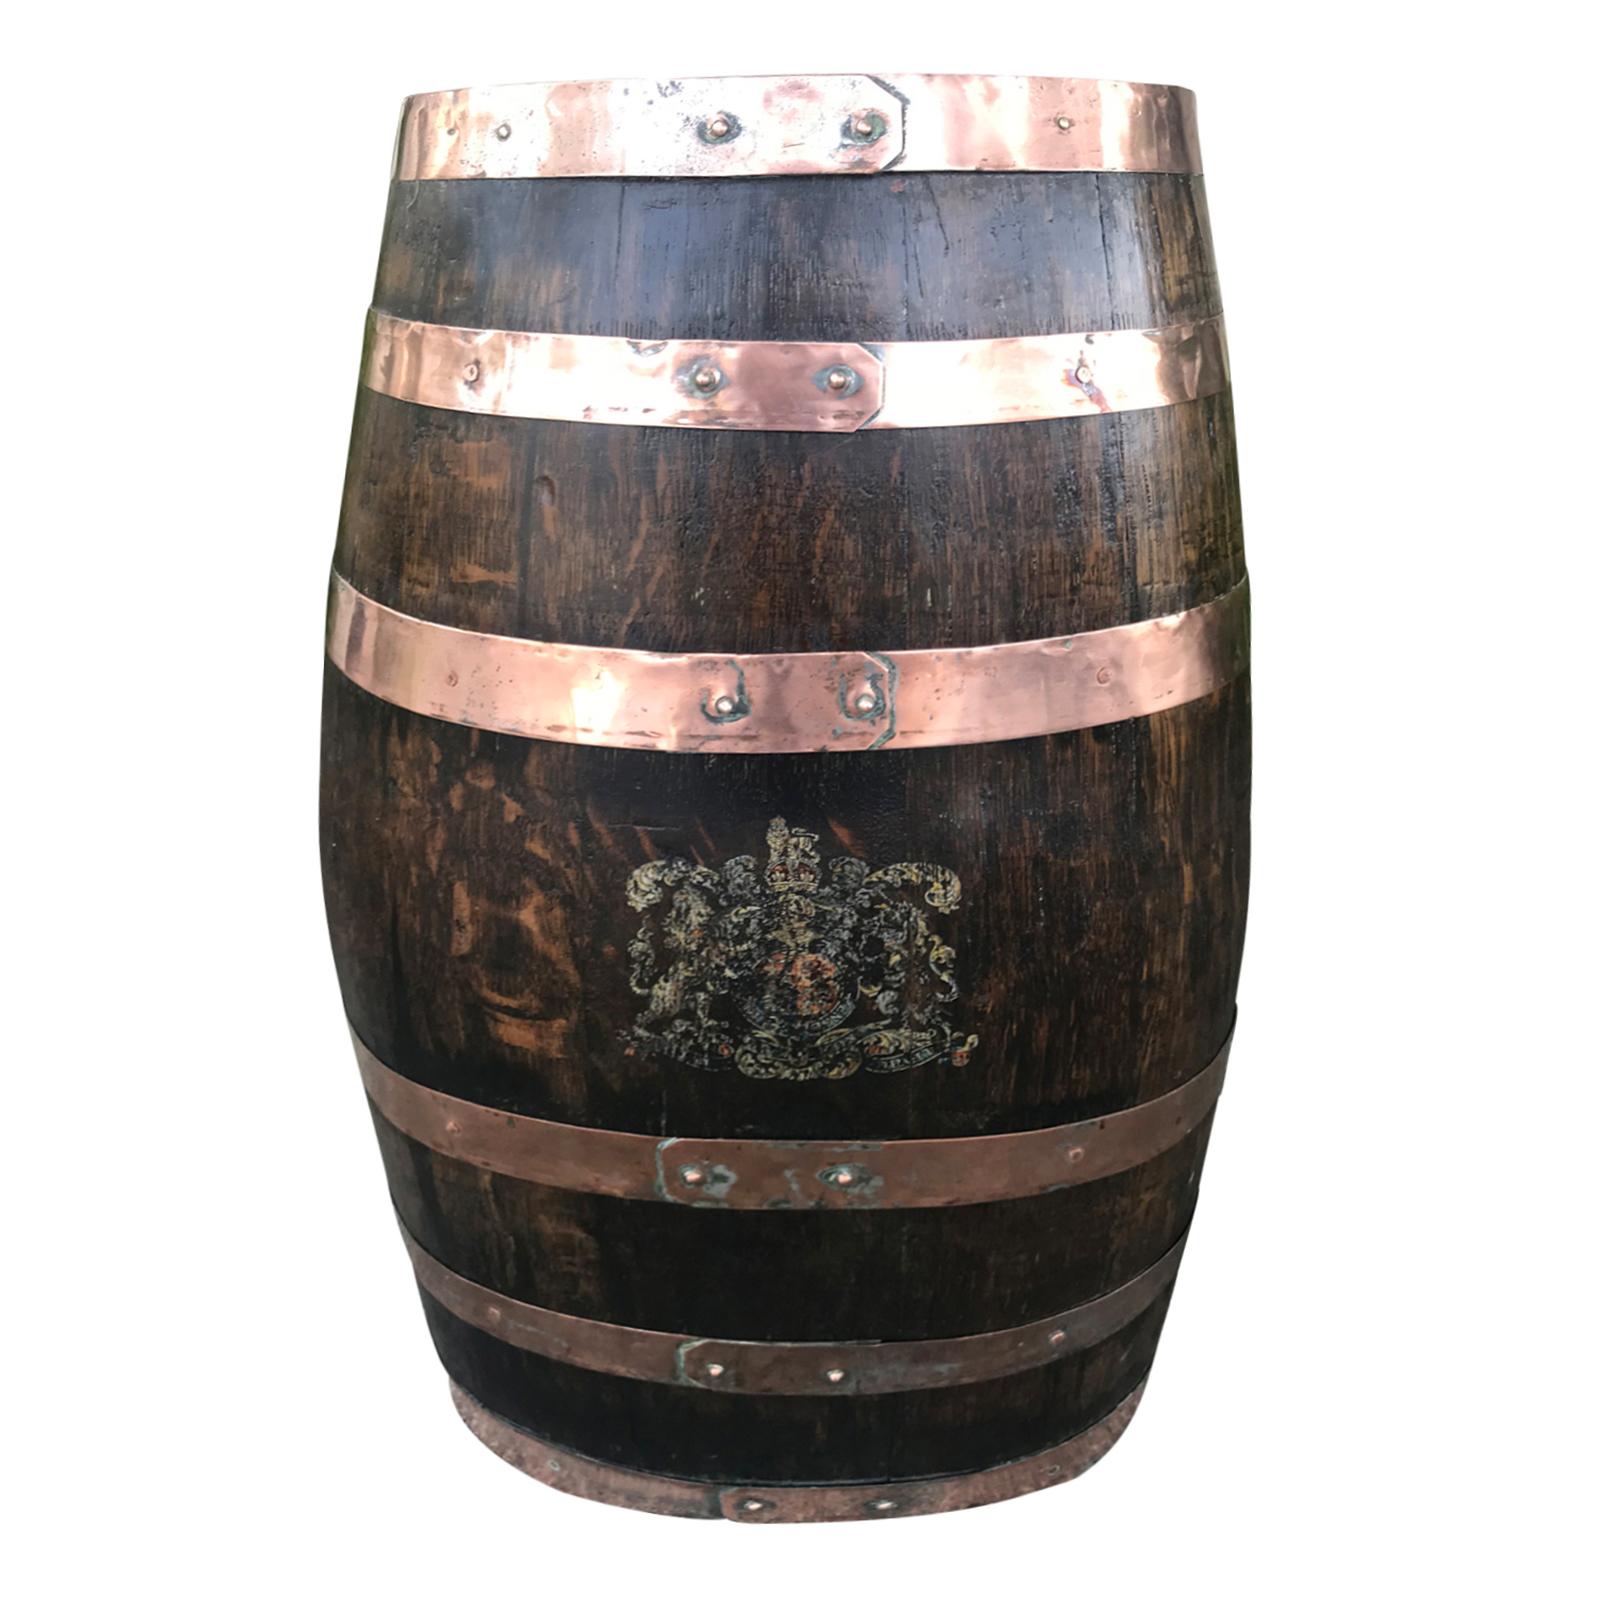 19th Century English Oak Barrel with Crest